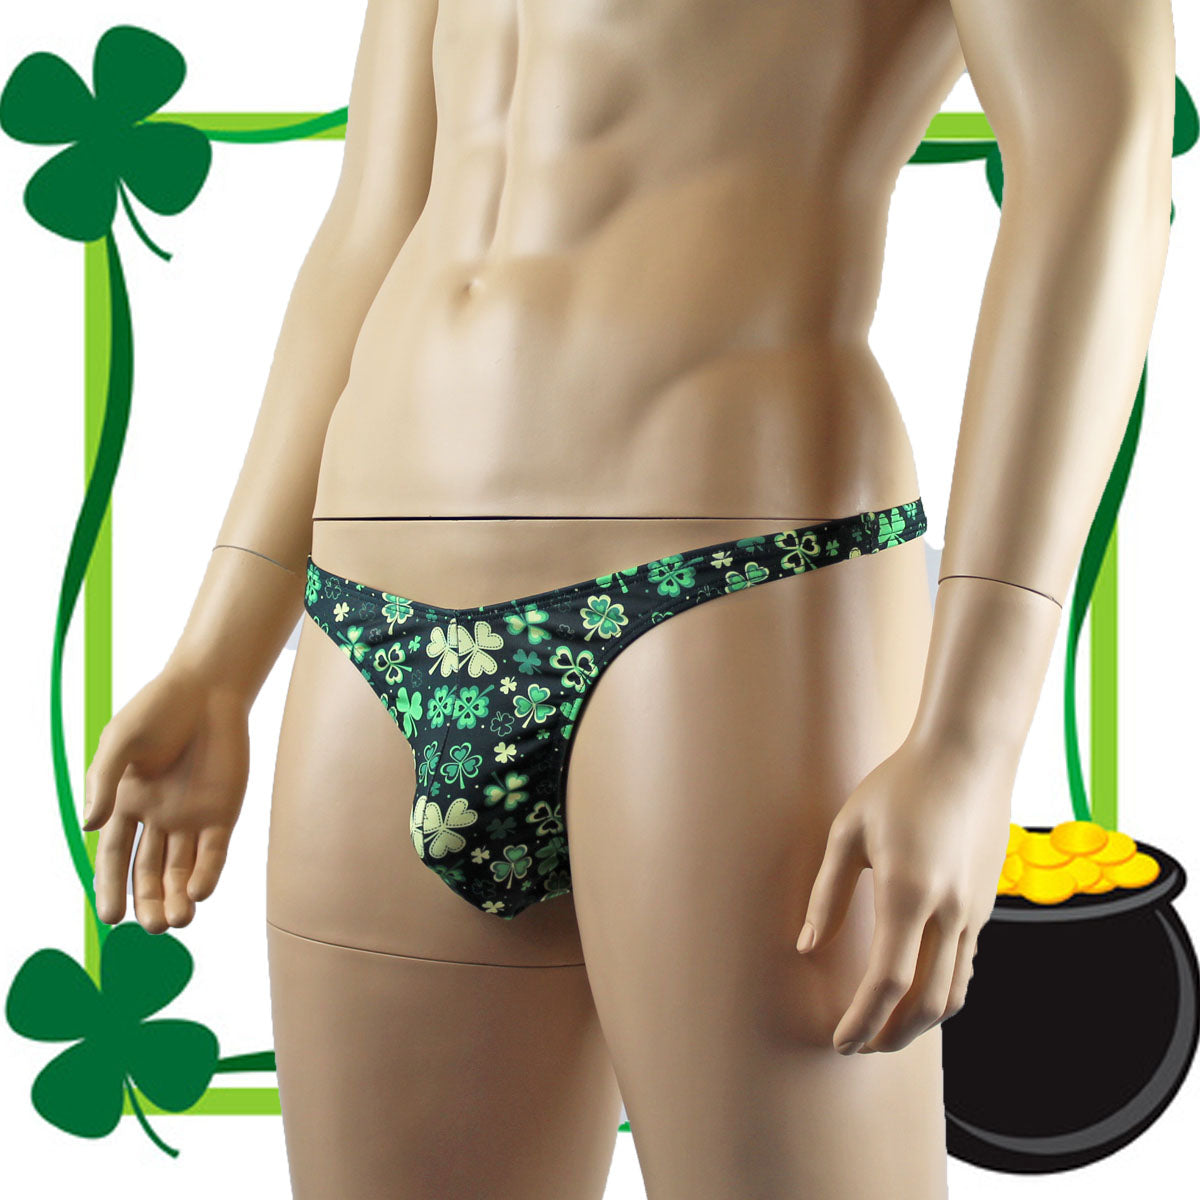 Get Lucky St Patricks Day Thong - Basic White Thong Underwear